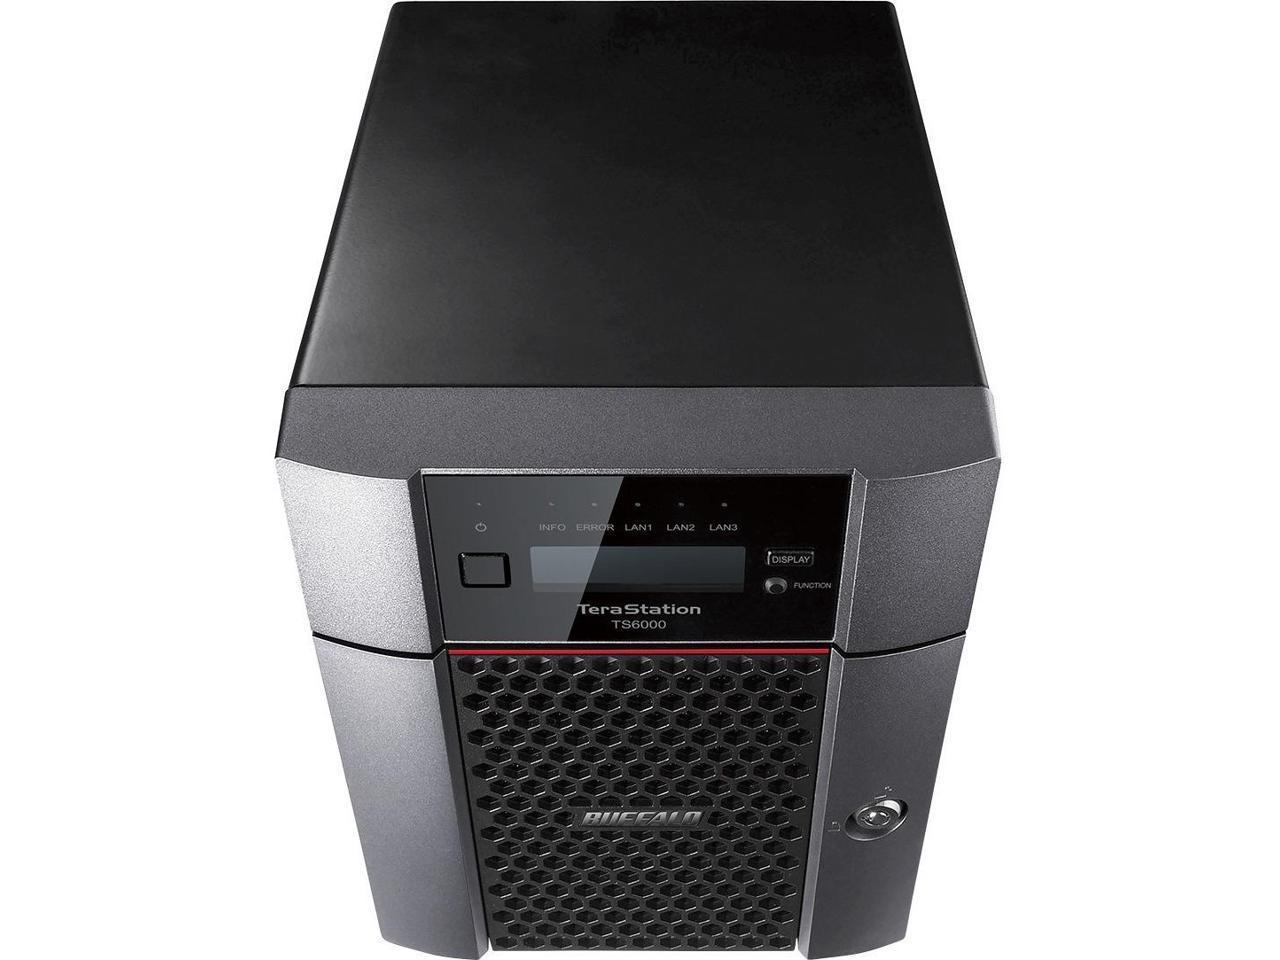 Buffalo TeraStation TS6400DN 16TB Desktop NAS Hard Drives Included